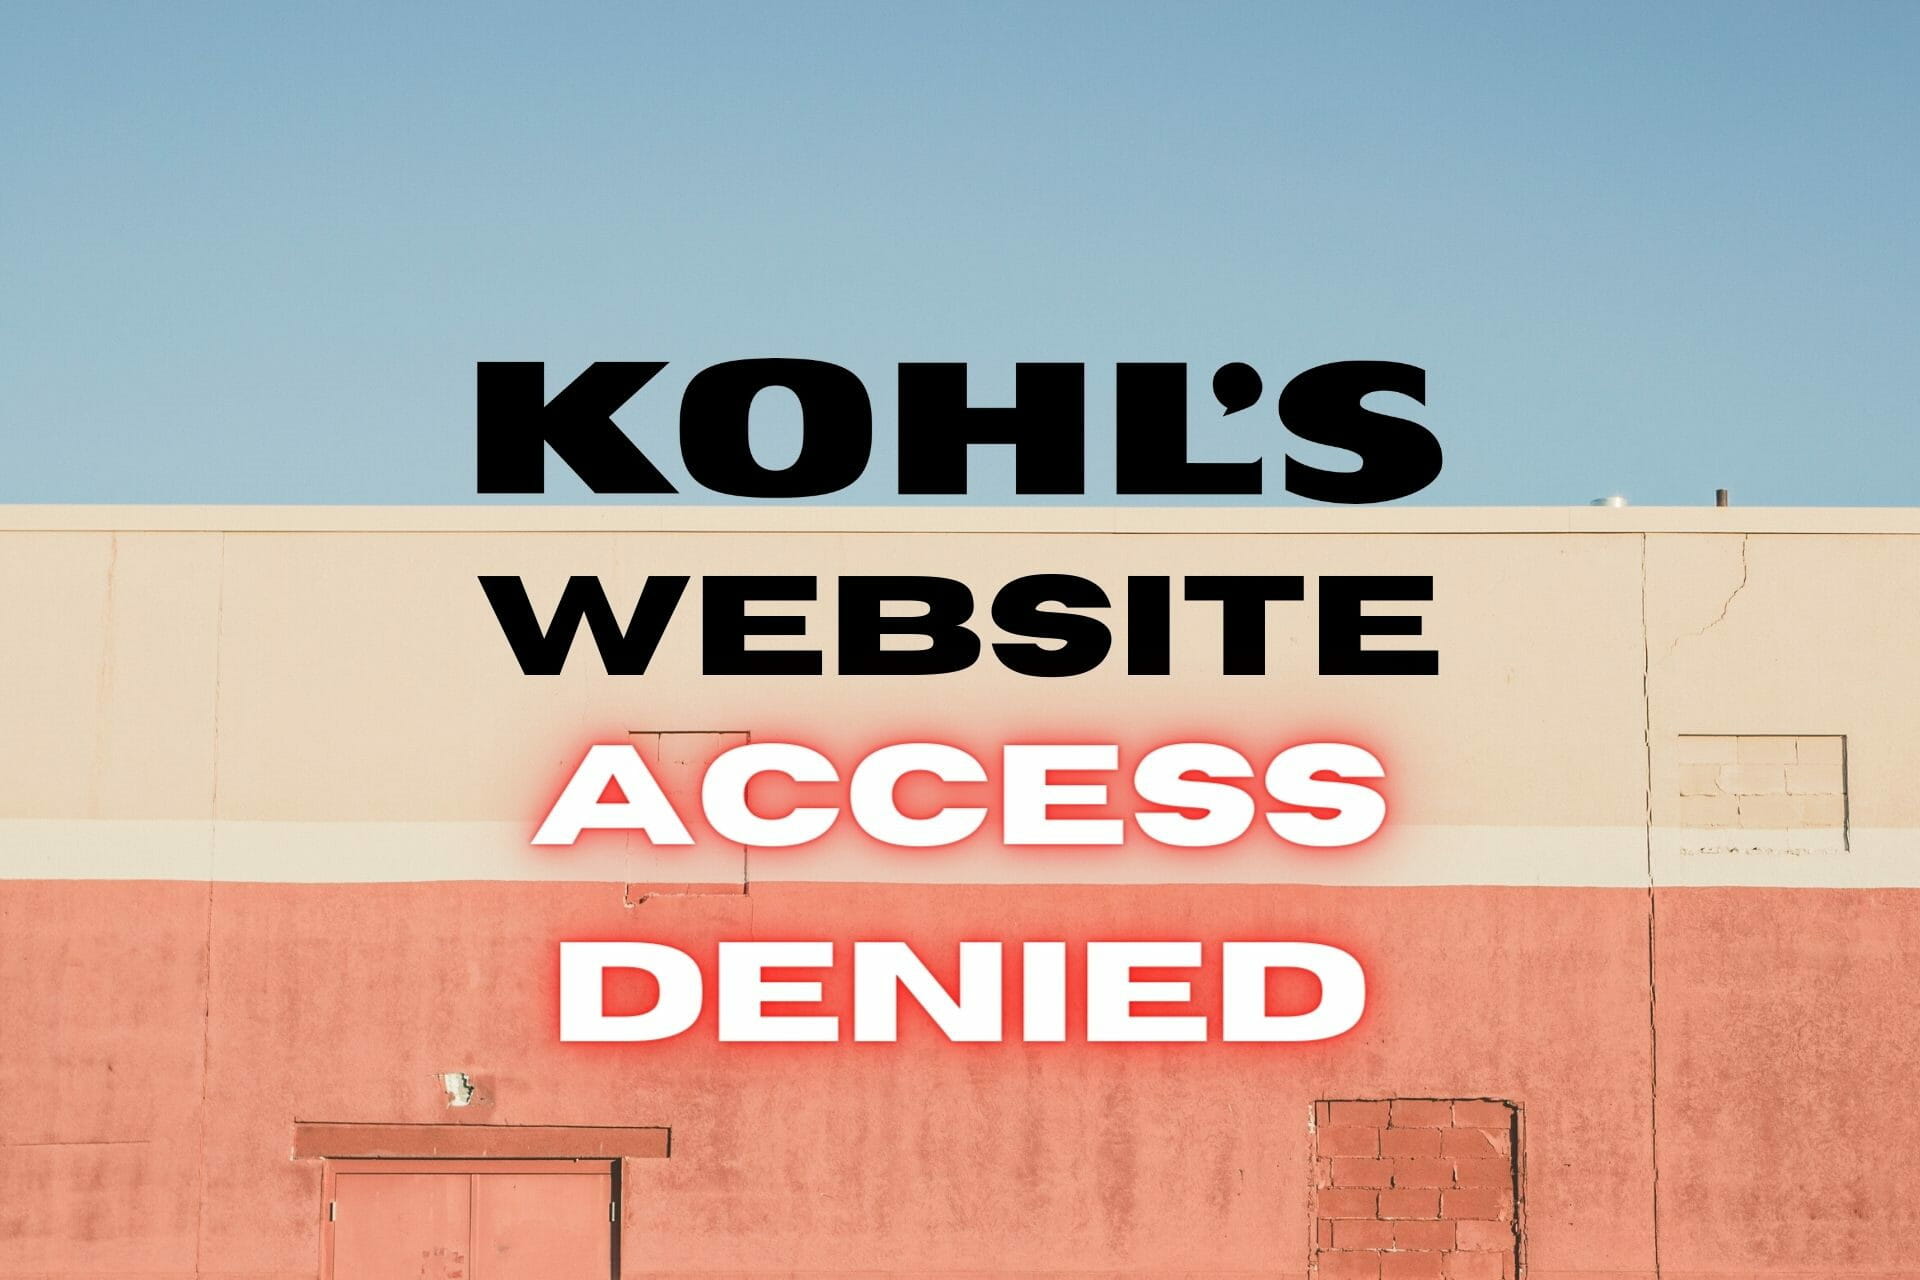 Kohl's website access denied